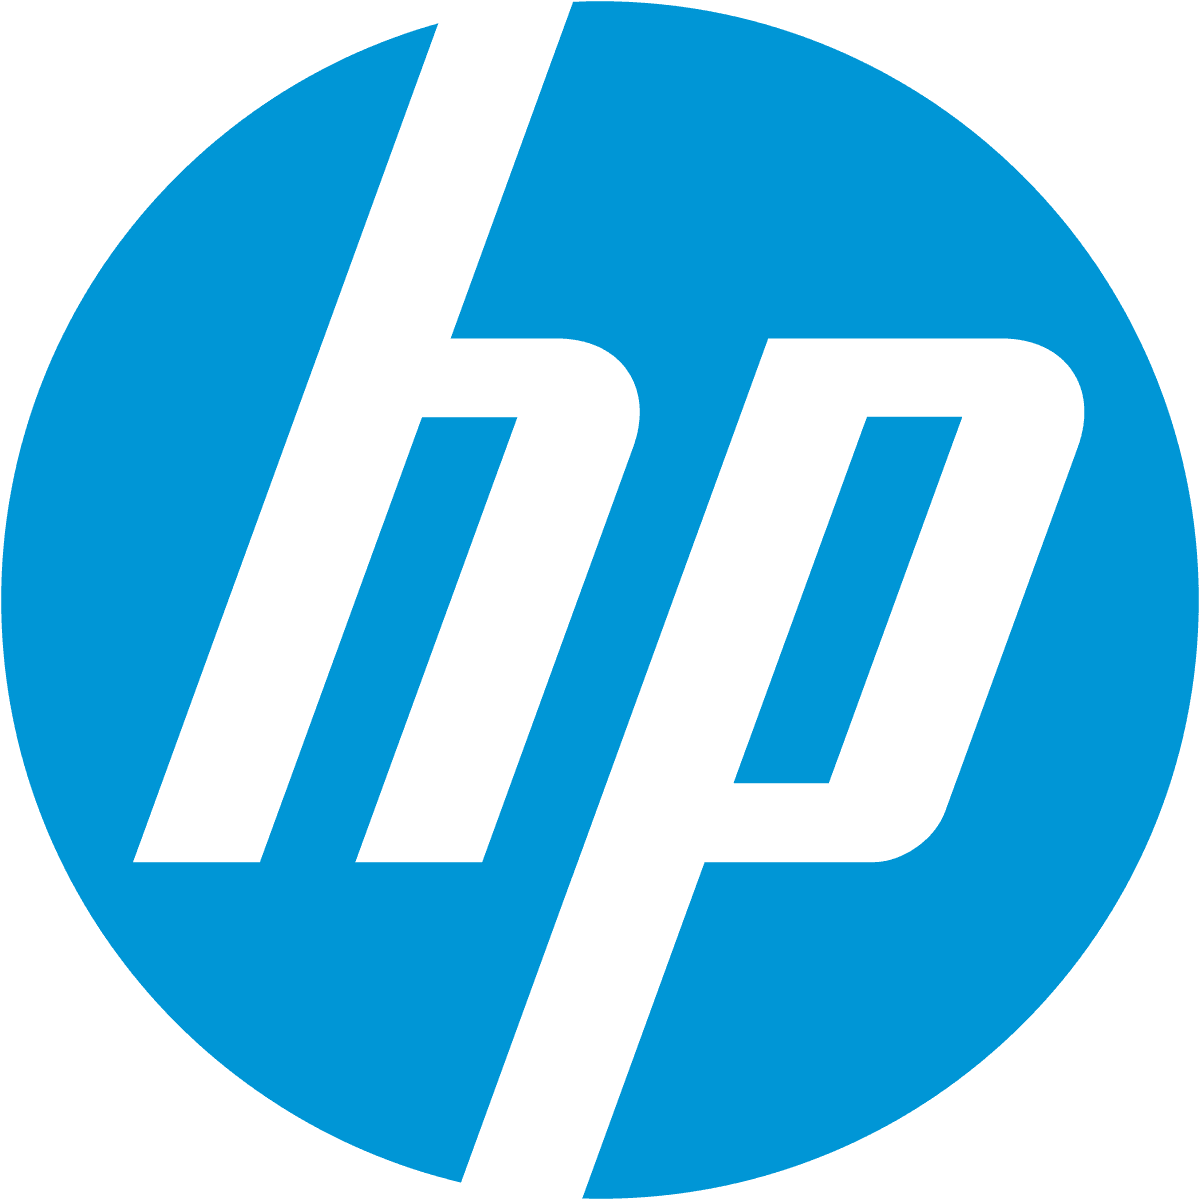 HP logosu